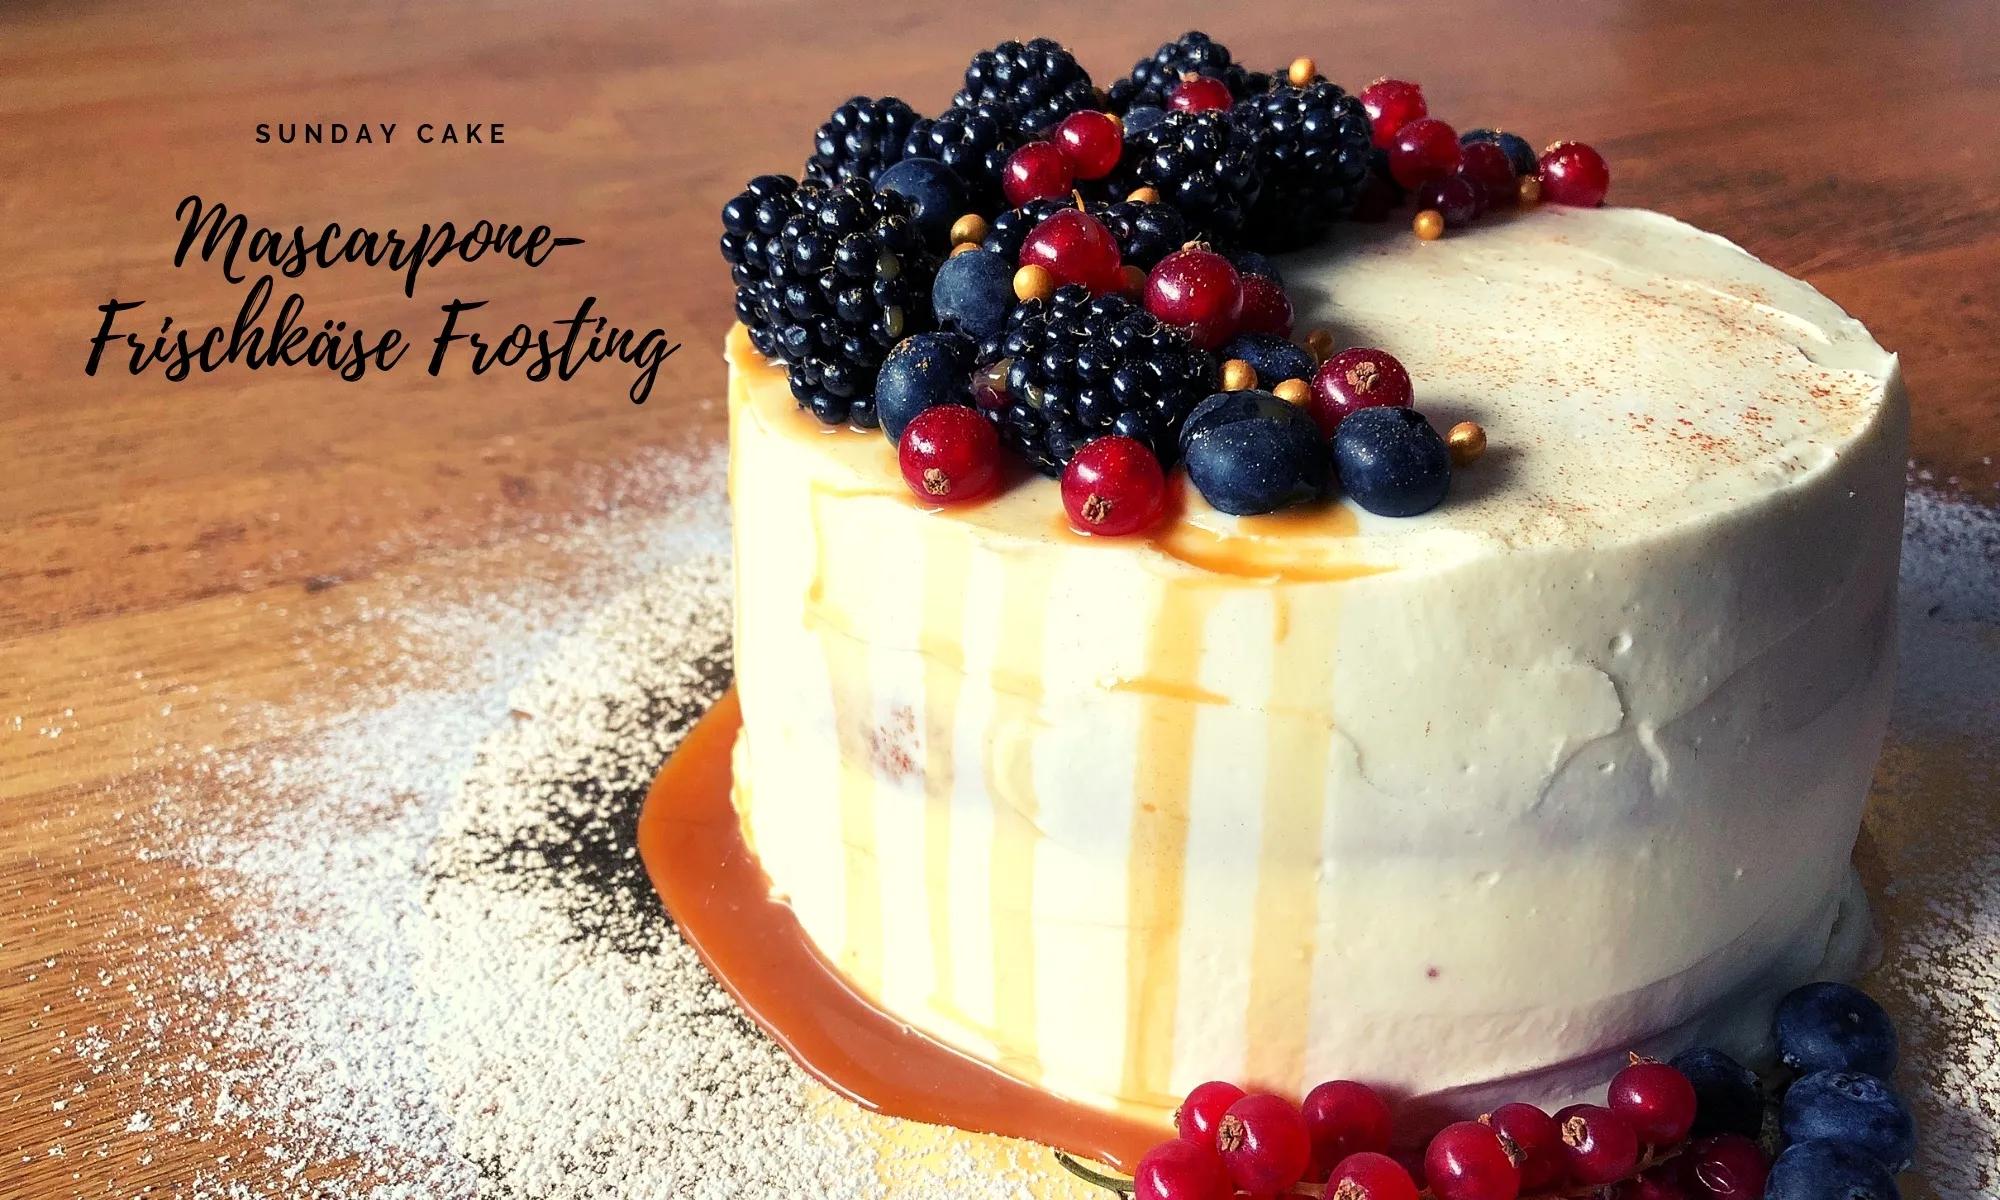 Mascarpone-Frischkäse-Frosting - Sunday Cake